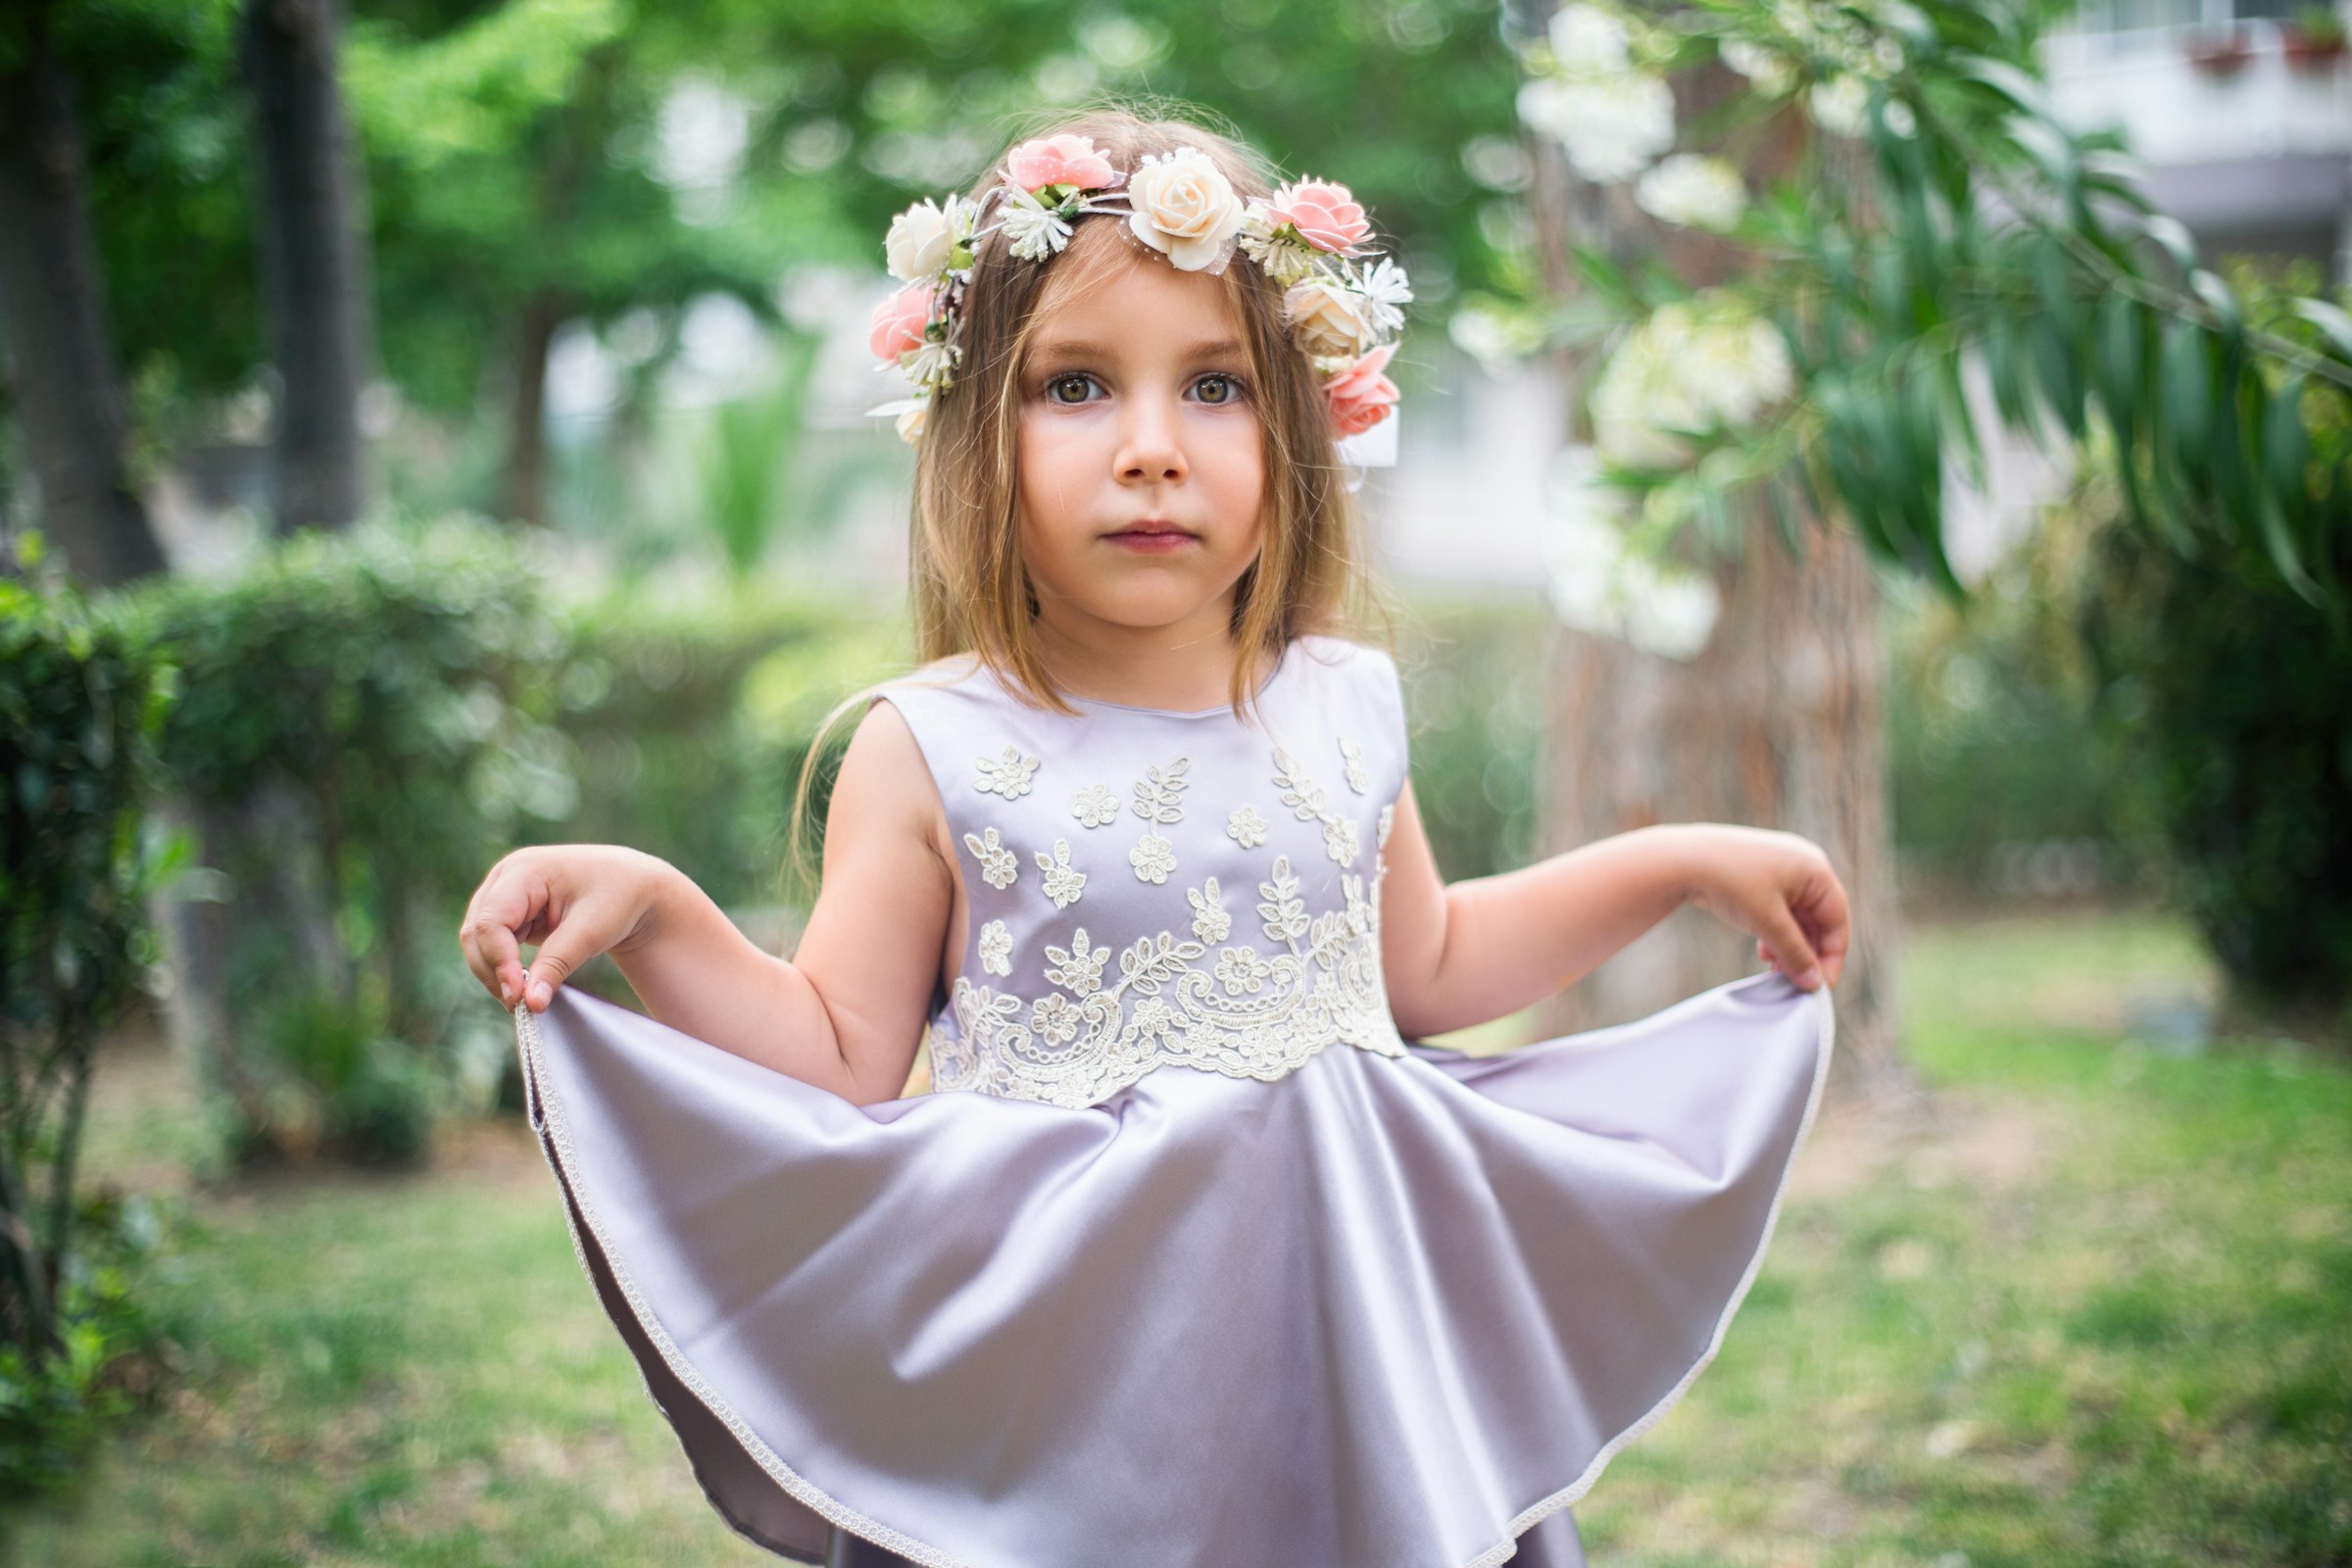 Little girl dressed as a flower girl | Source: Unsplash